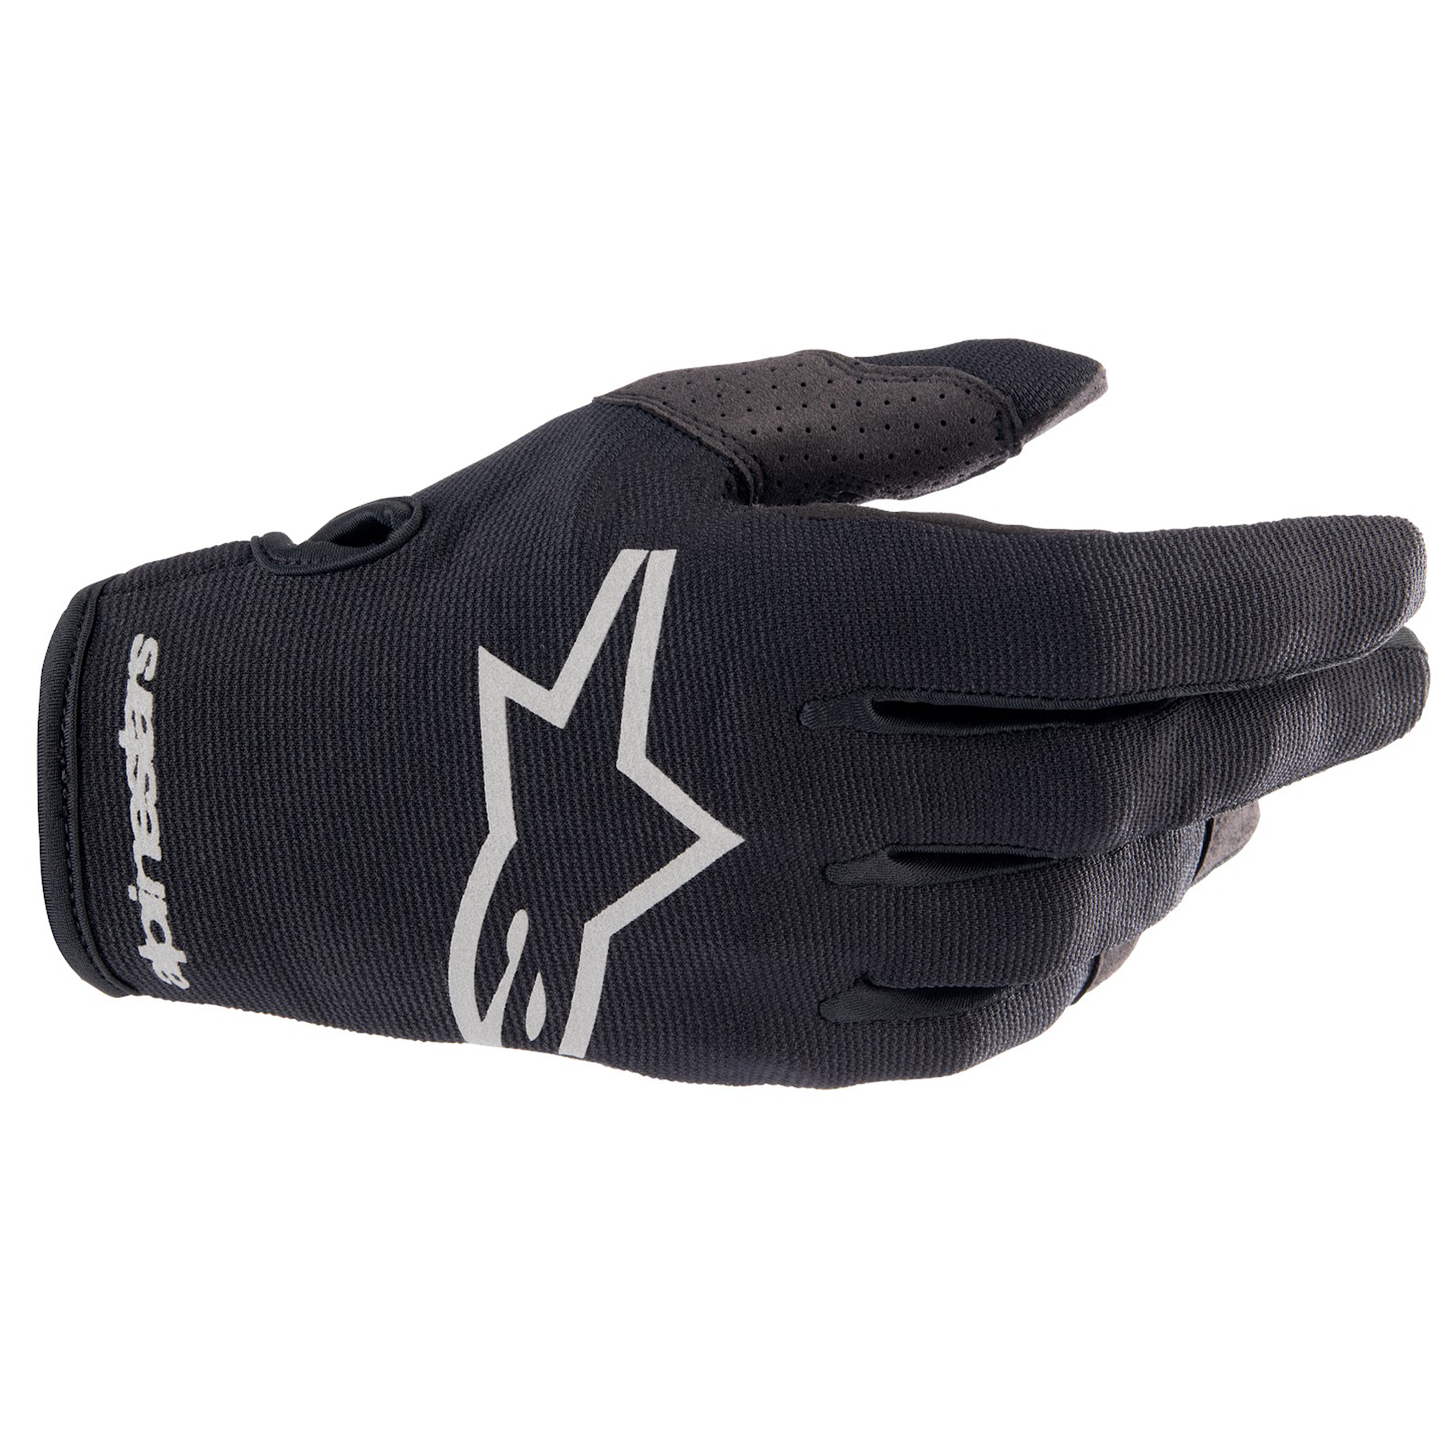 Alpinestars Radar Gloves - Black/Brushed Silver